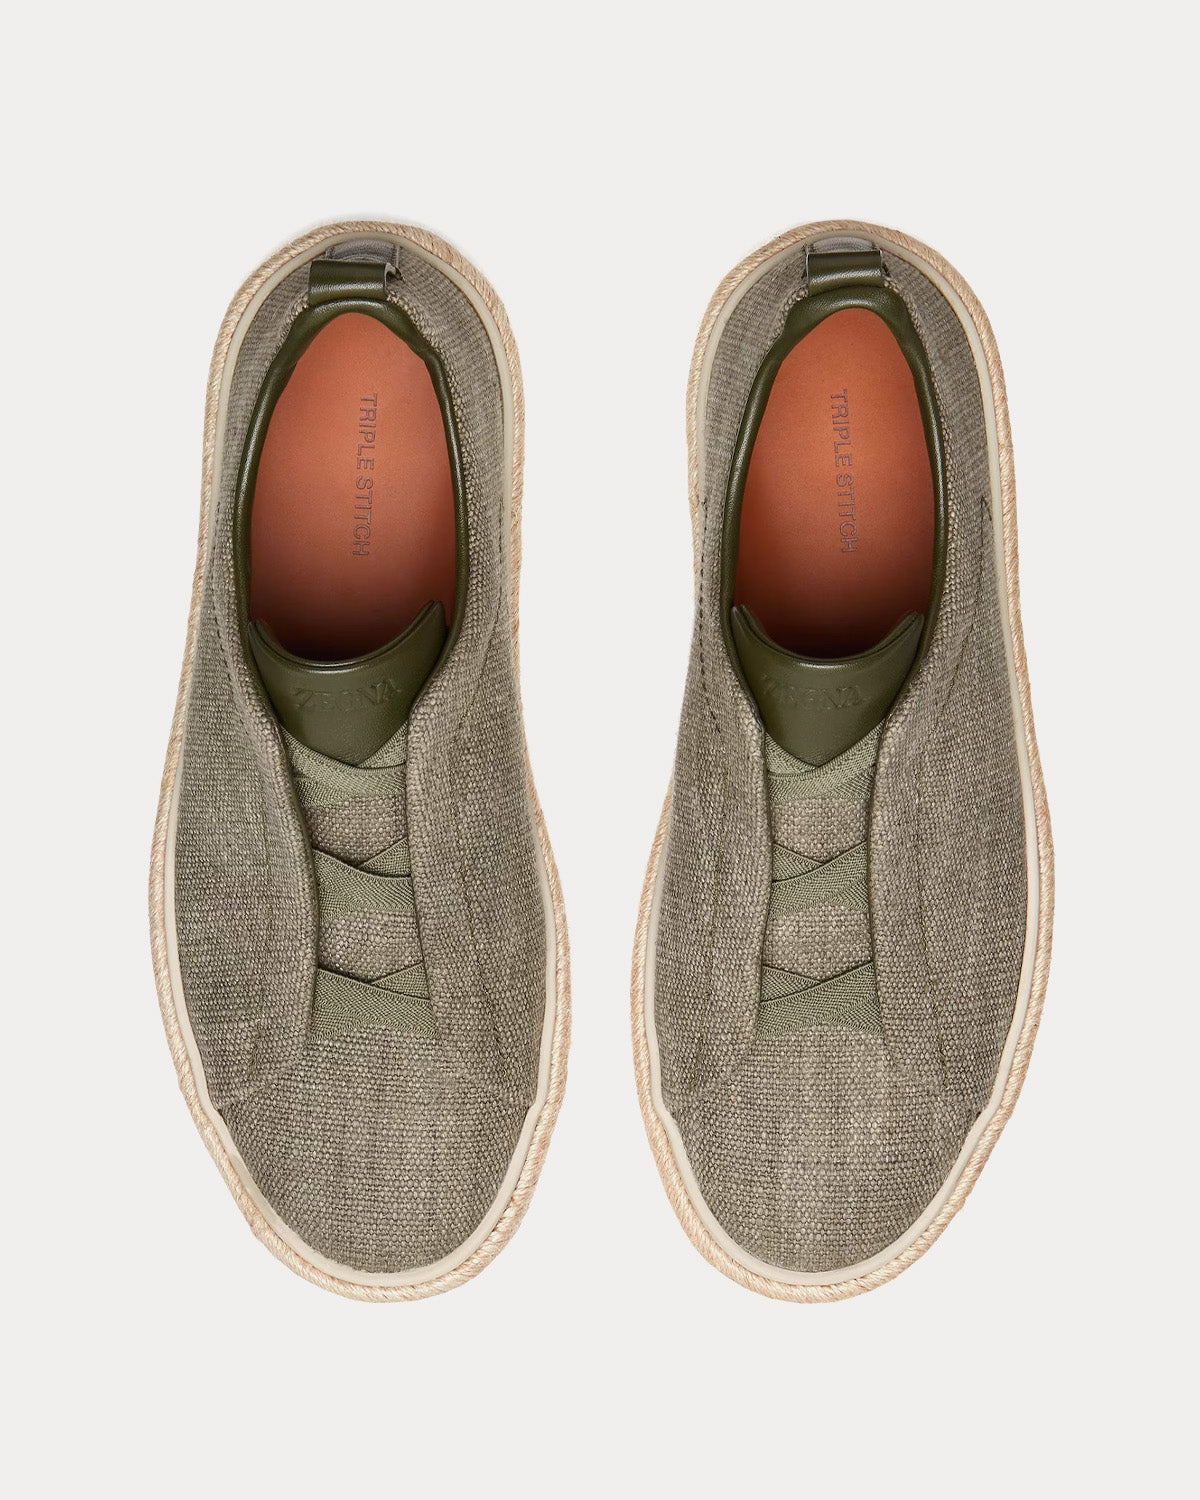 Zegna - Triple Stitch Espadrilles Linen Light Military Green Slip On Sneakers